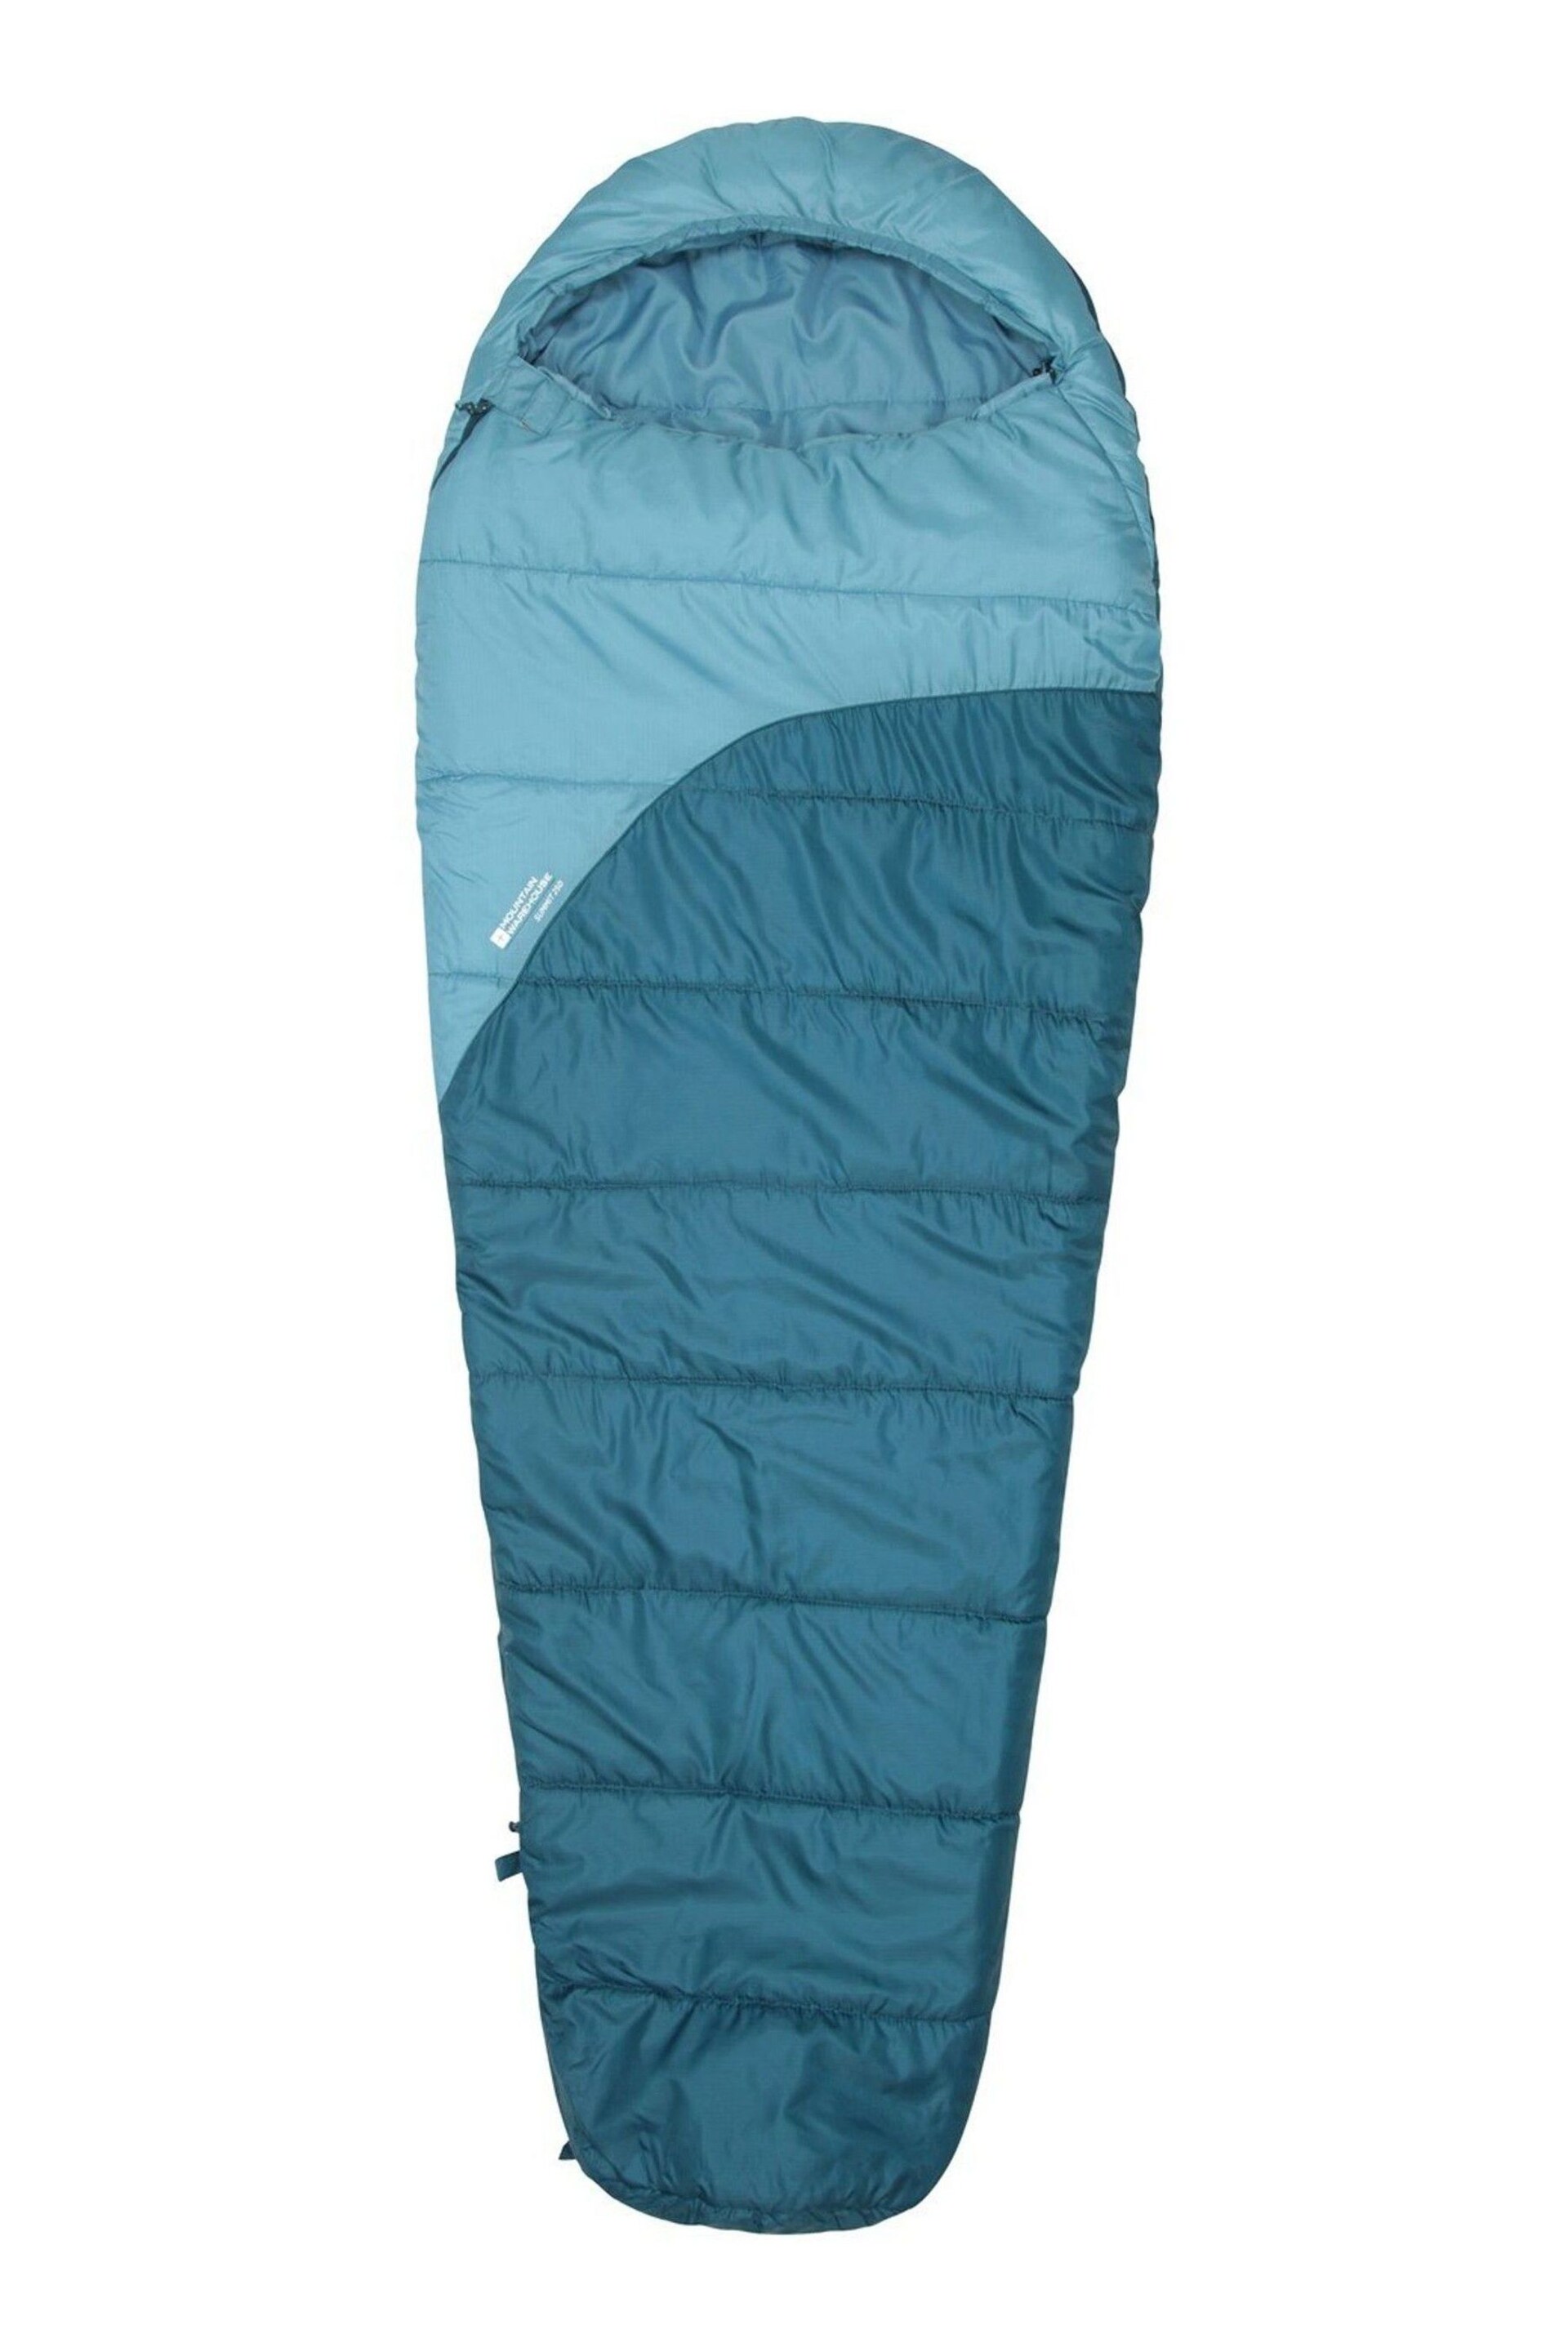 Mountain Warehouse Blue Summit 250 Sleeping Bag - Image 3 of 4